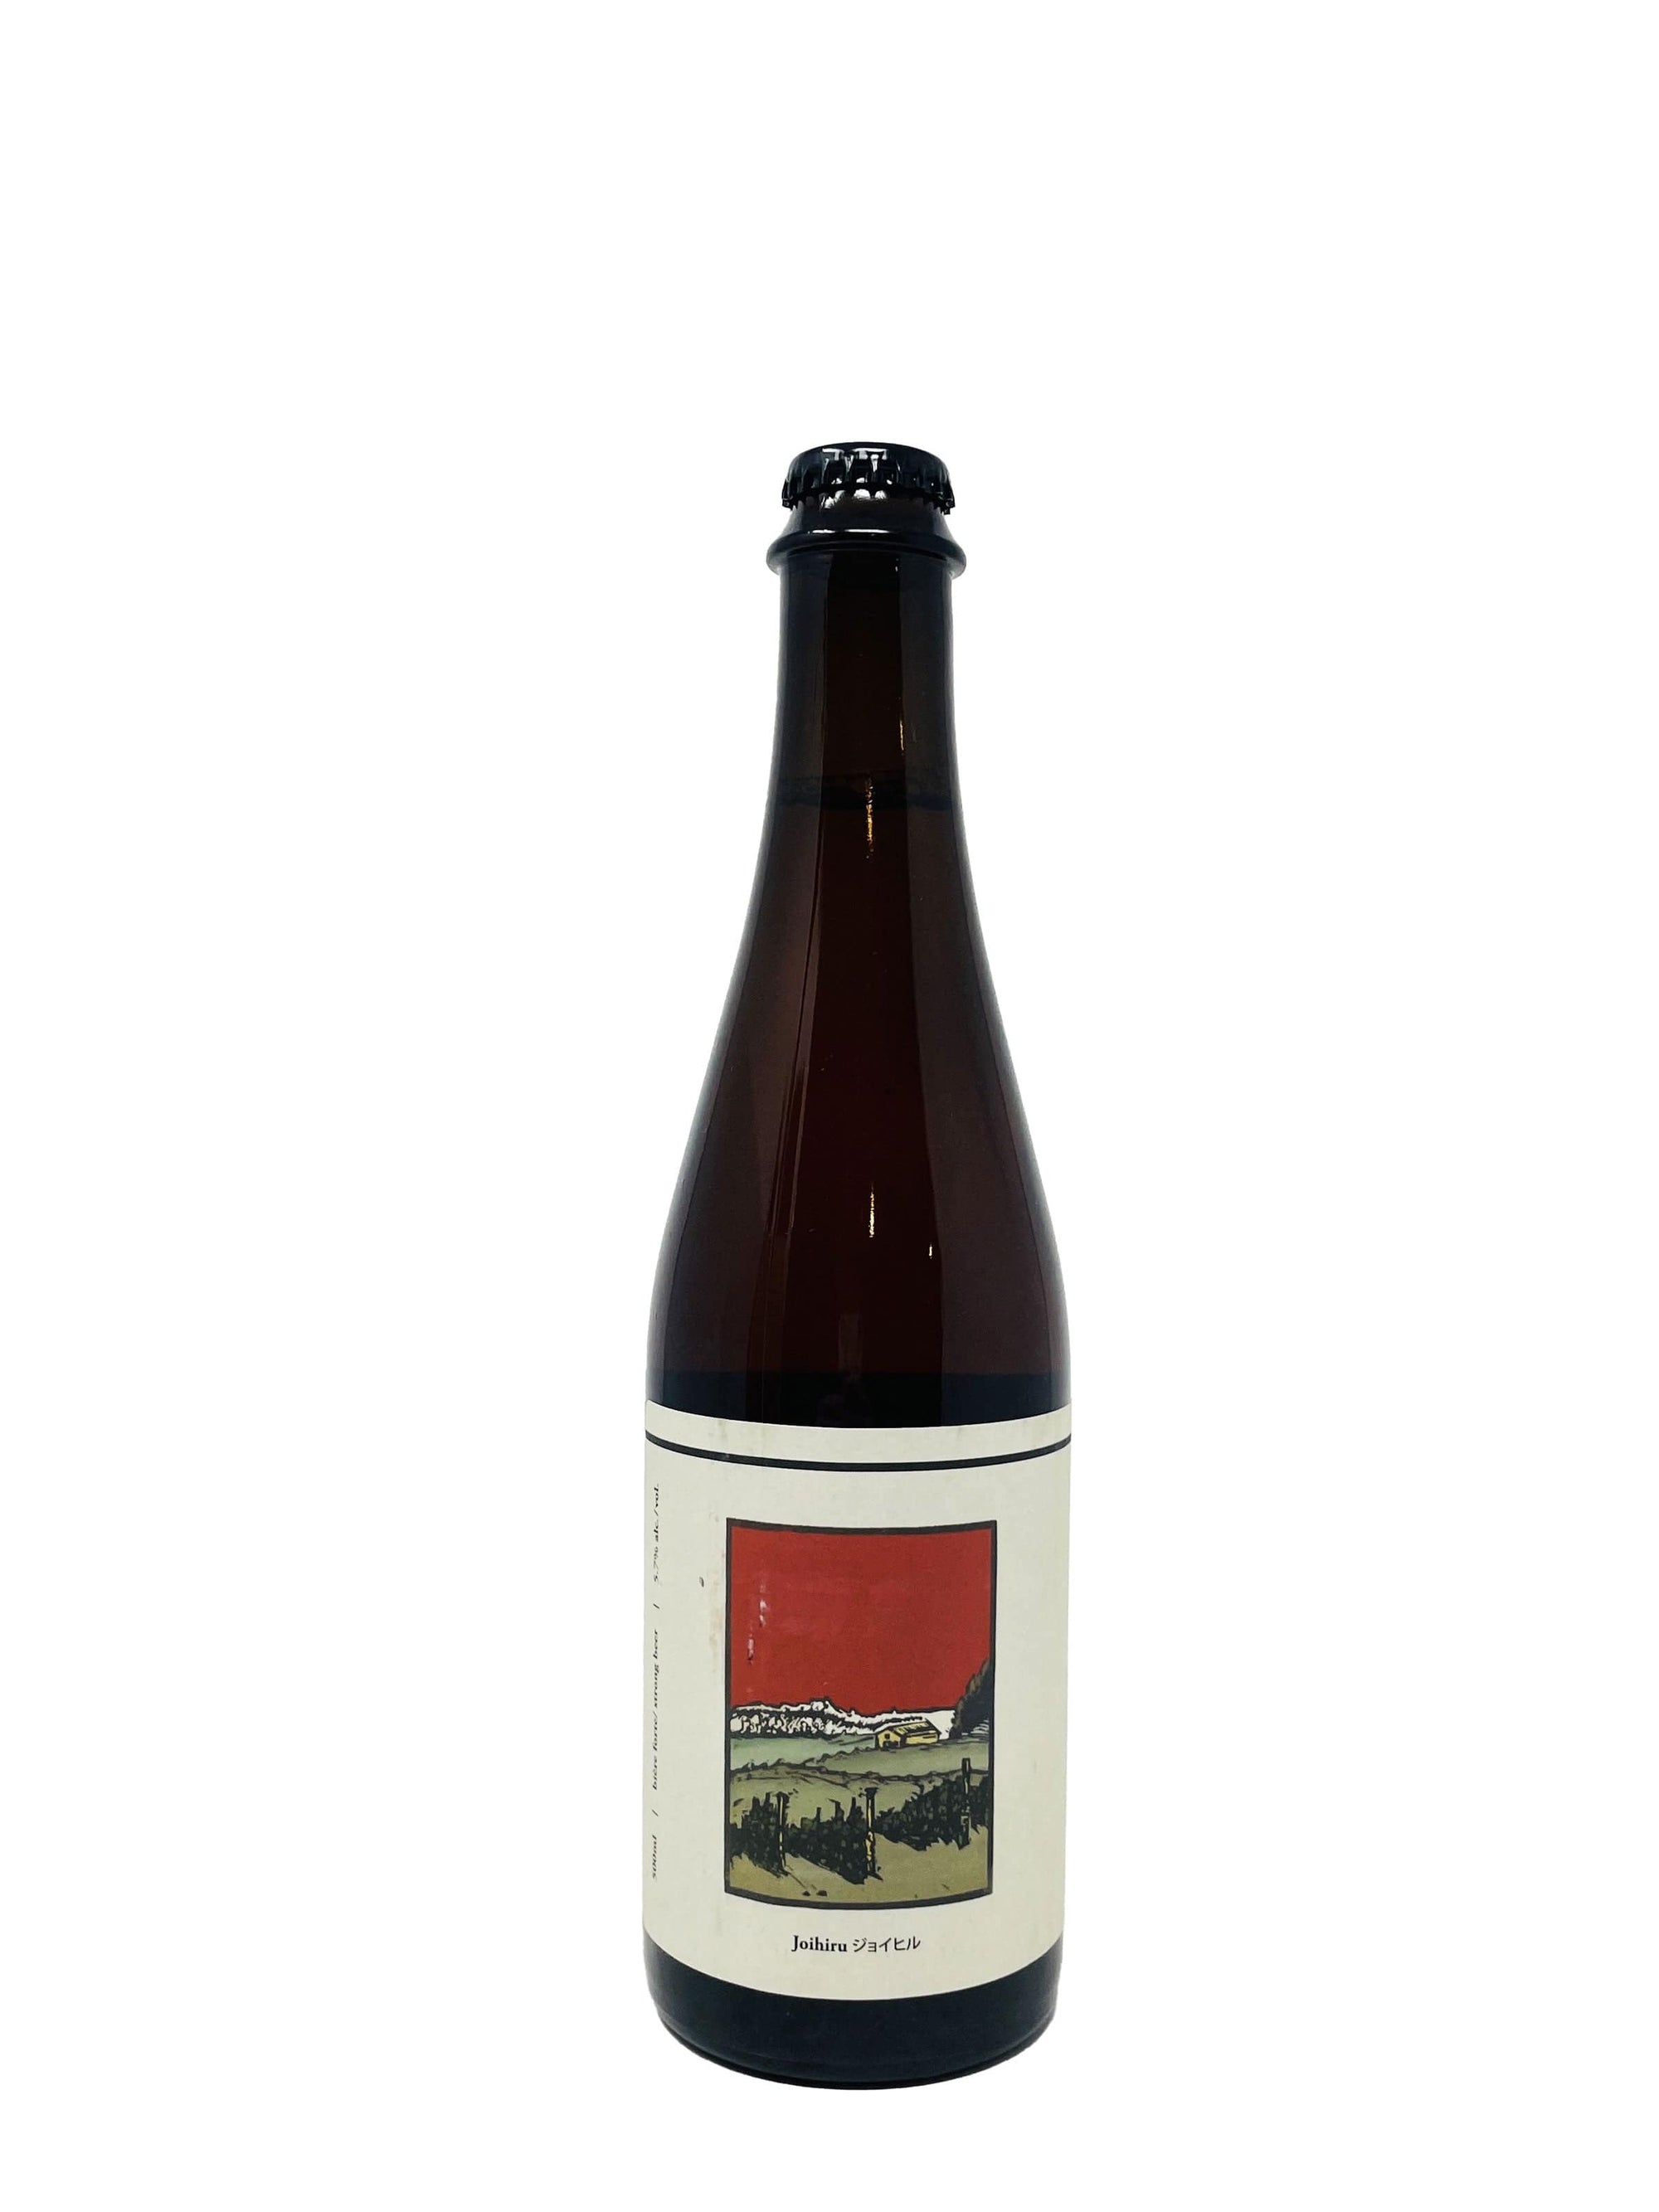 Microbrasserie Ippon Bière Bière Joihiru Ale sauvage (consigne incluse) - Microbrasserie Ippon X Maison Agricole Joy Hill